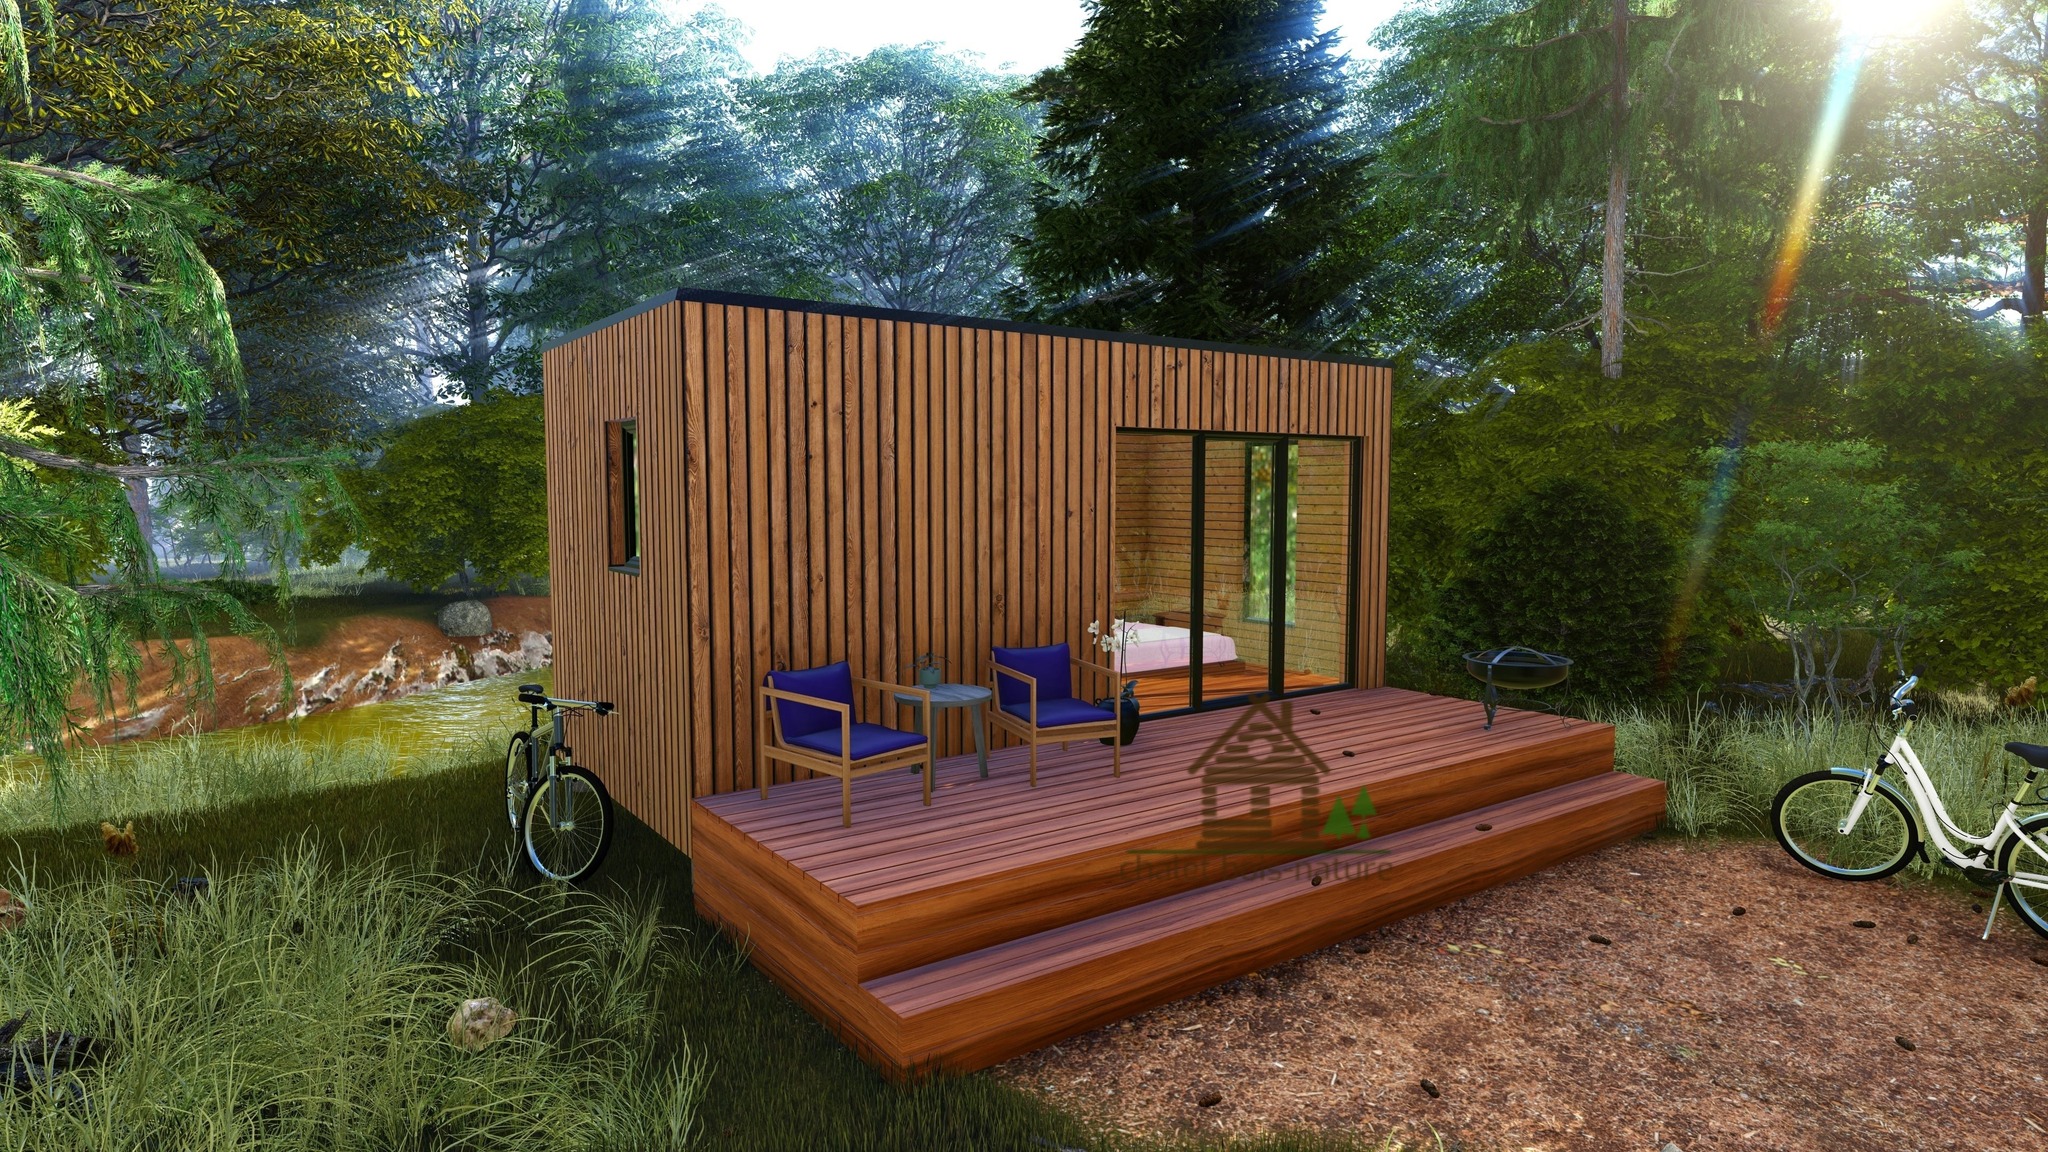 S Chalet Bois / Chalet « Camping18 » en bois de 18m² en madriers massifs de 44mm + Bardage horizontal